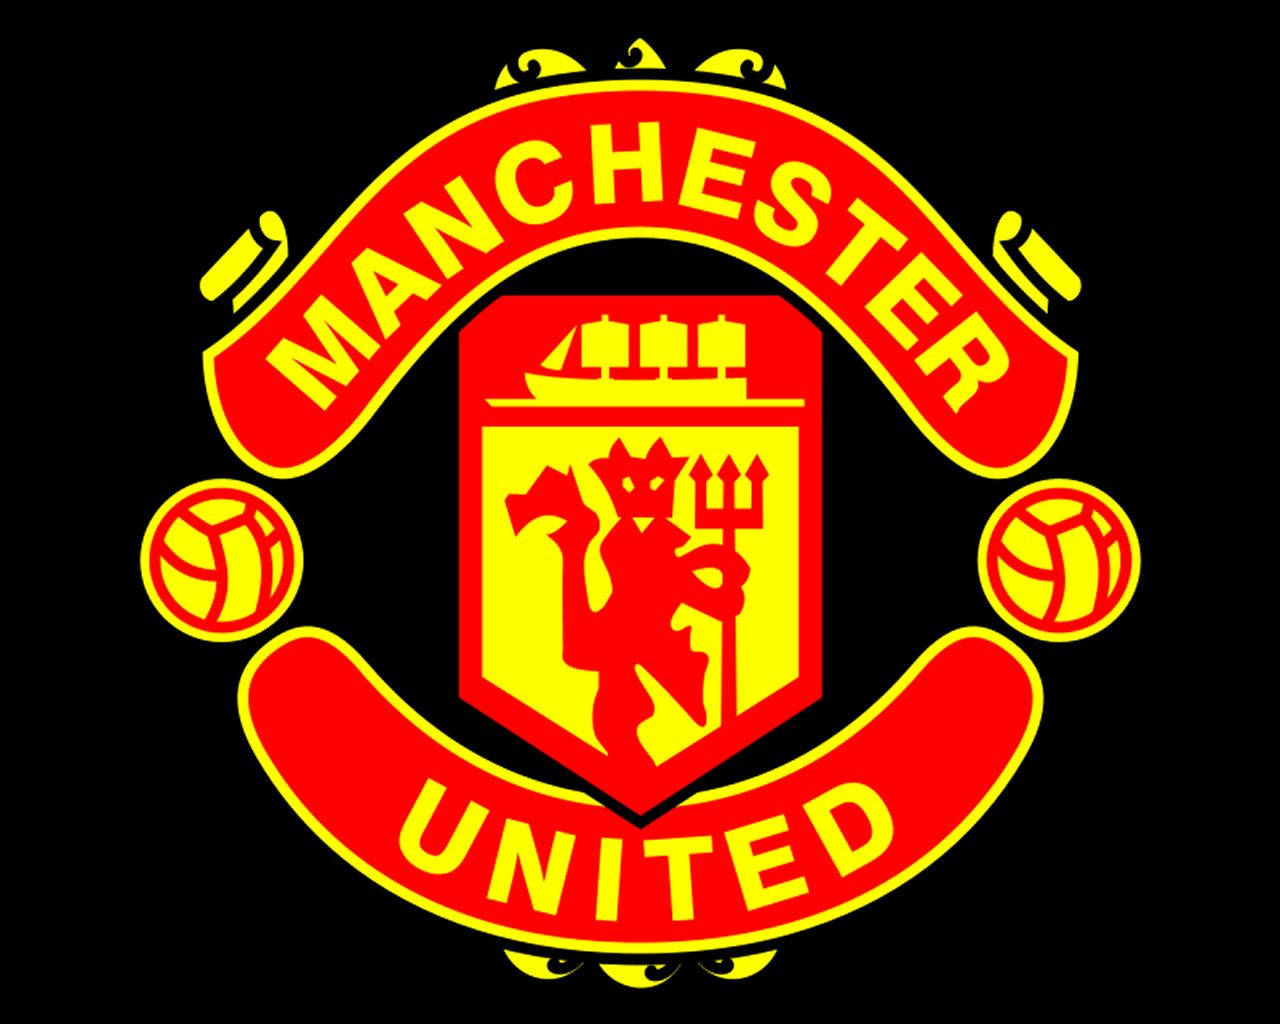 Manchester United Logo Football Club Wallpaper